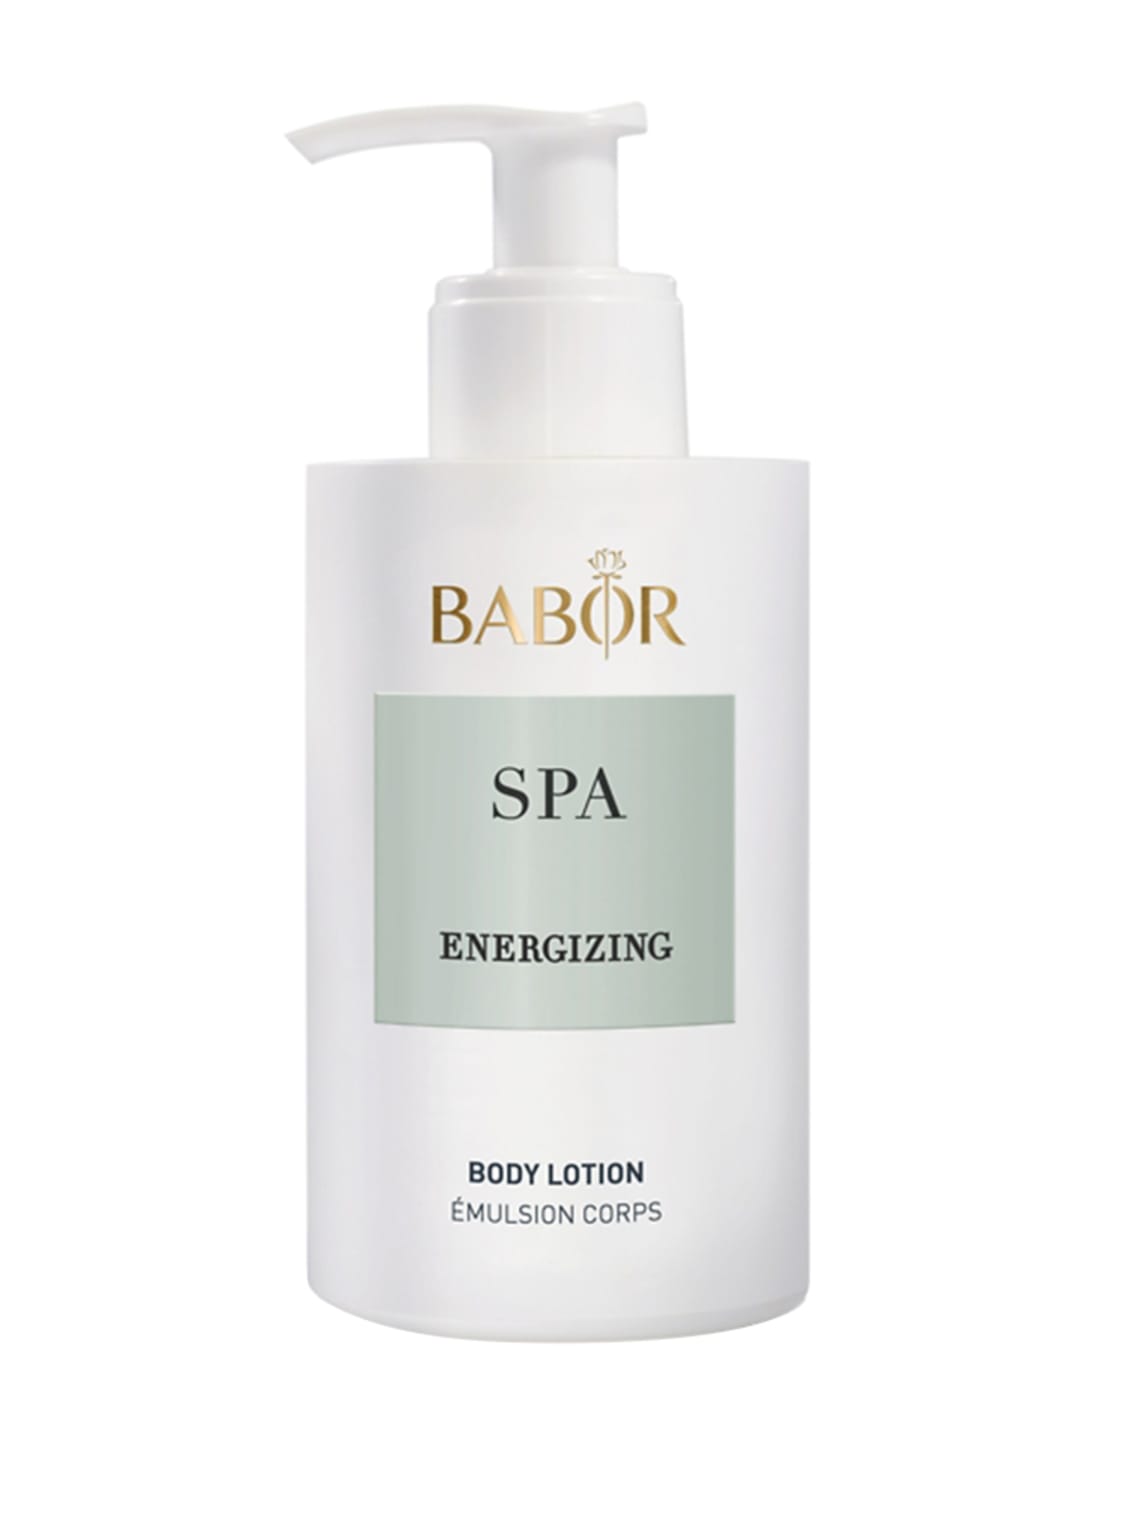 Babor Spa Energizing Body Lotion 200 ml von BABOR